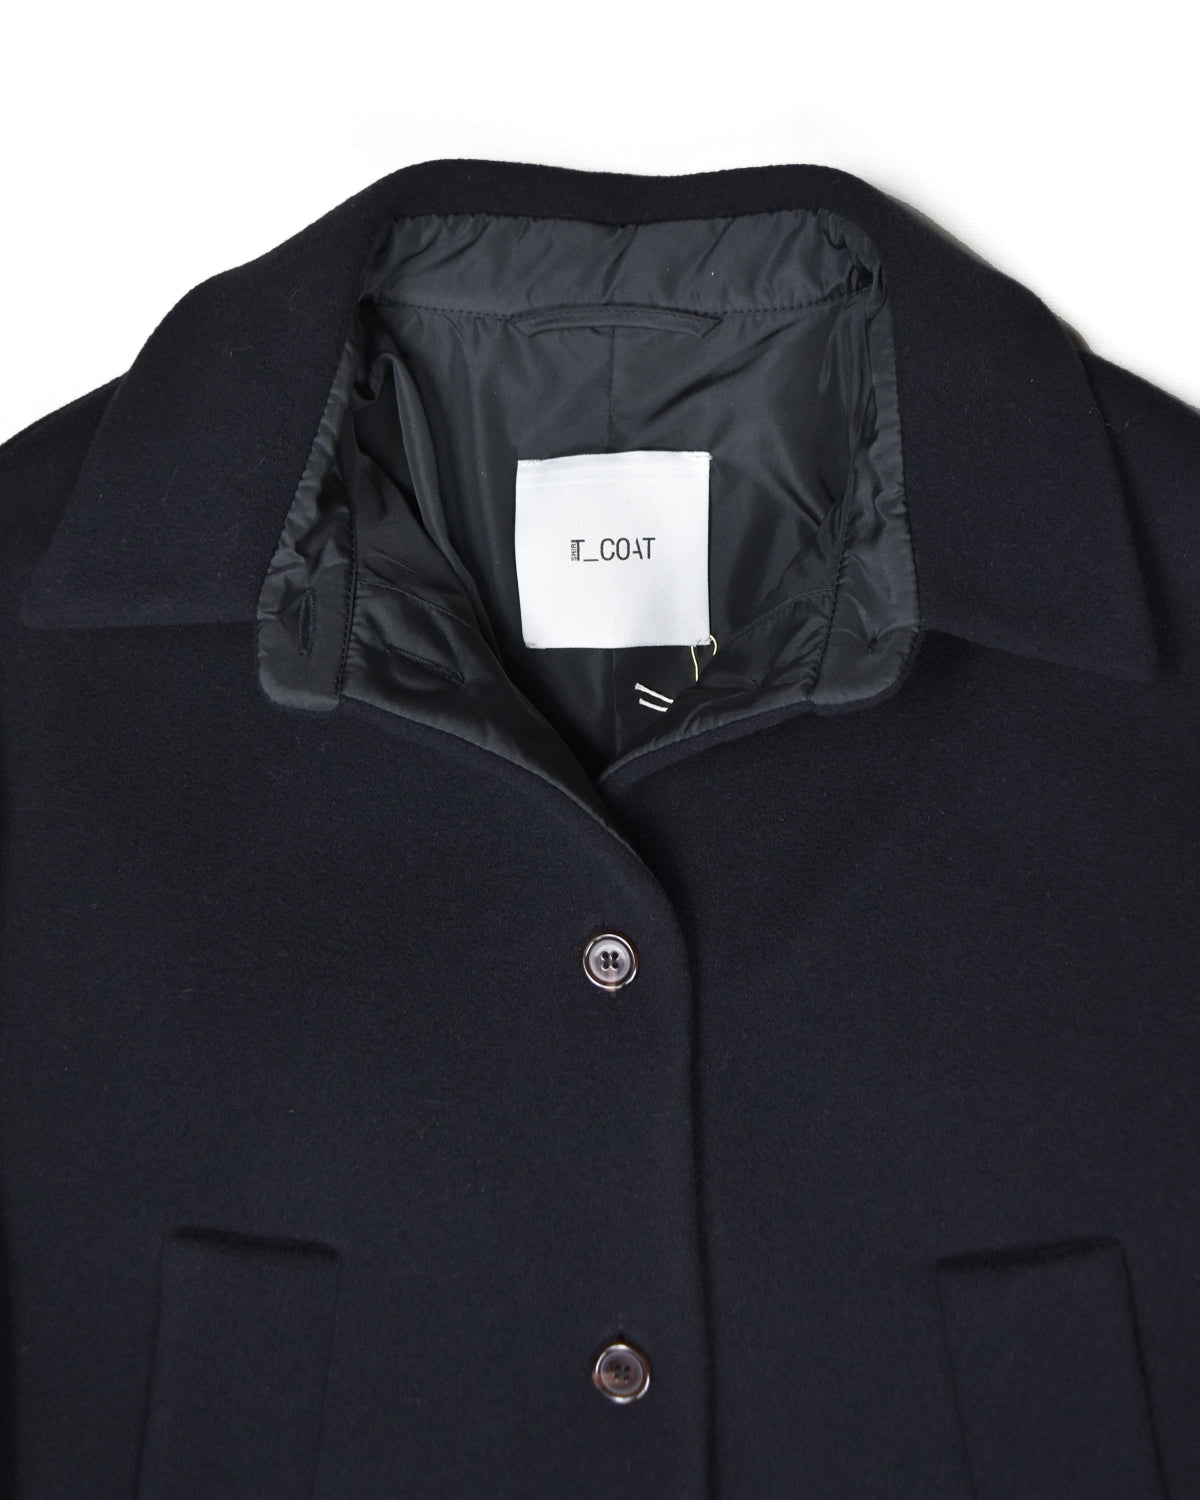 T-Coat Women's Black Wool Botton Down Overcoat Made in Italy